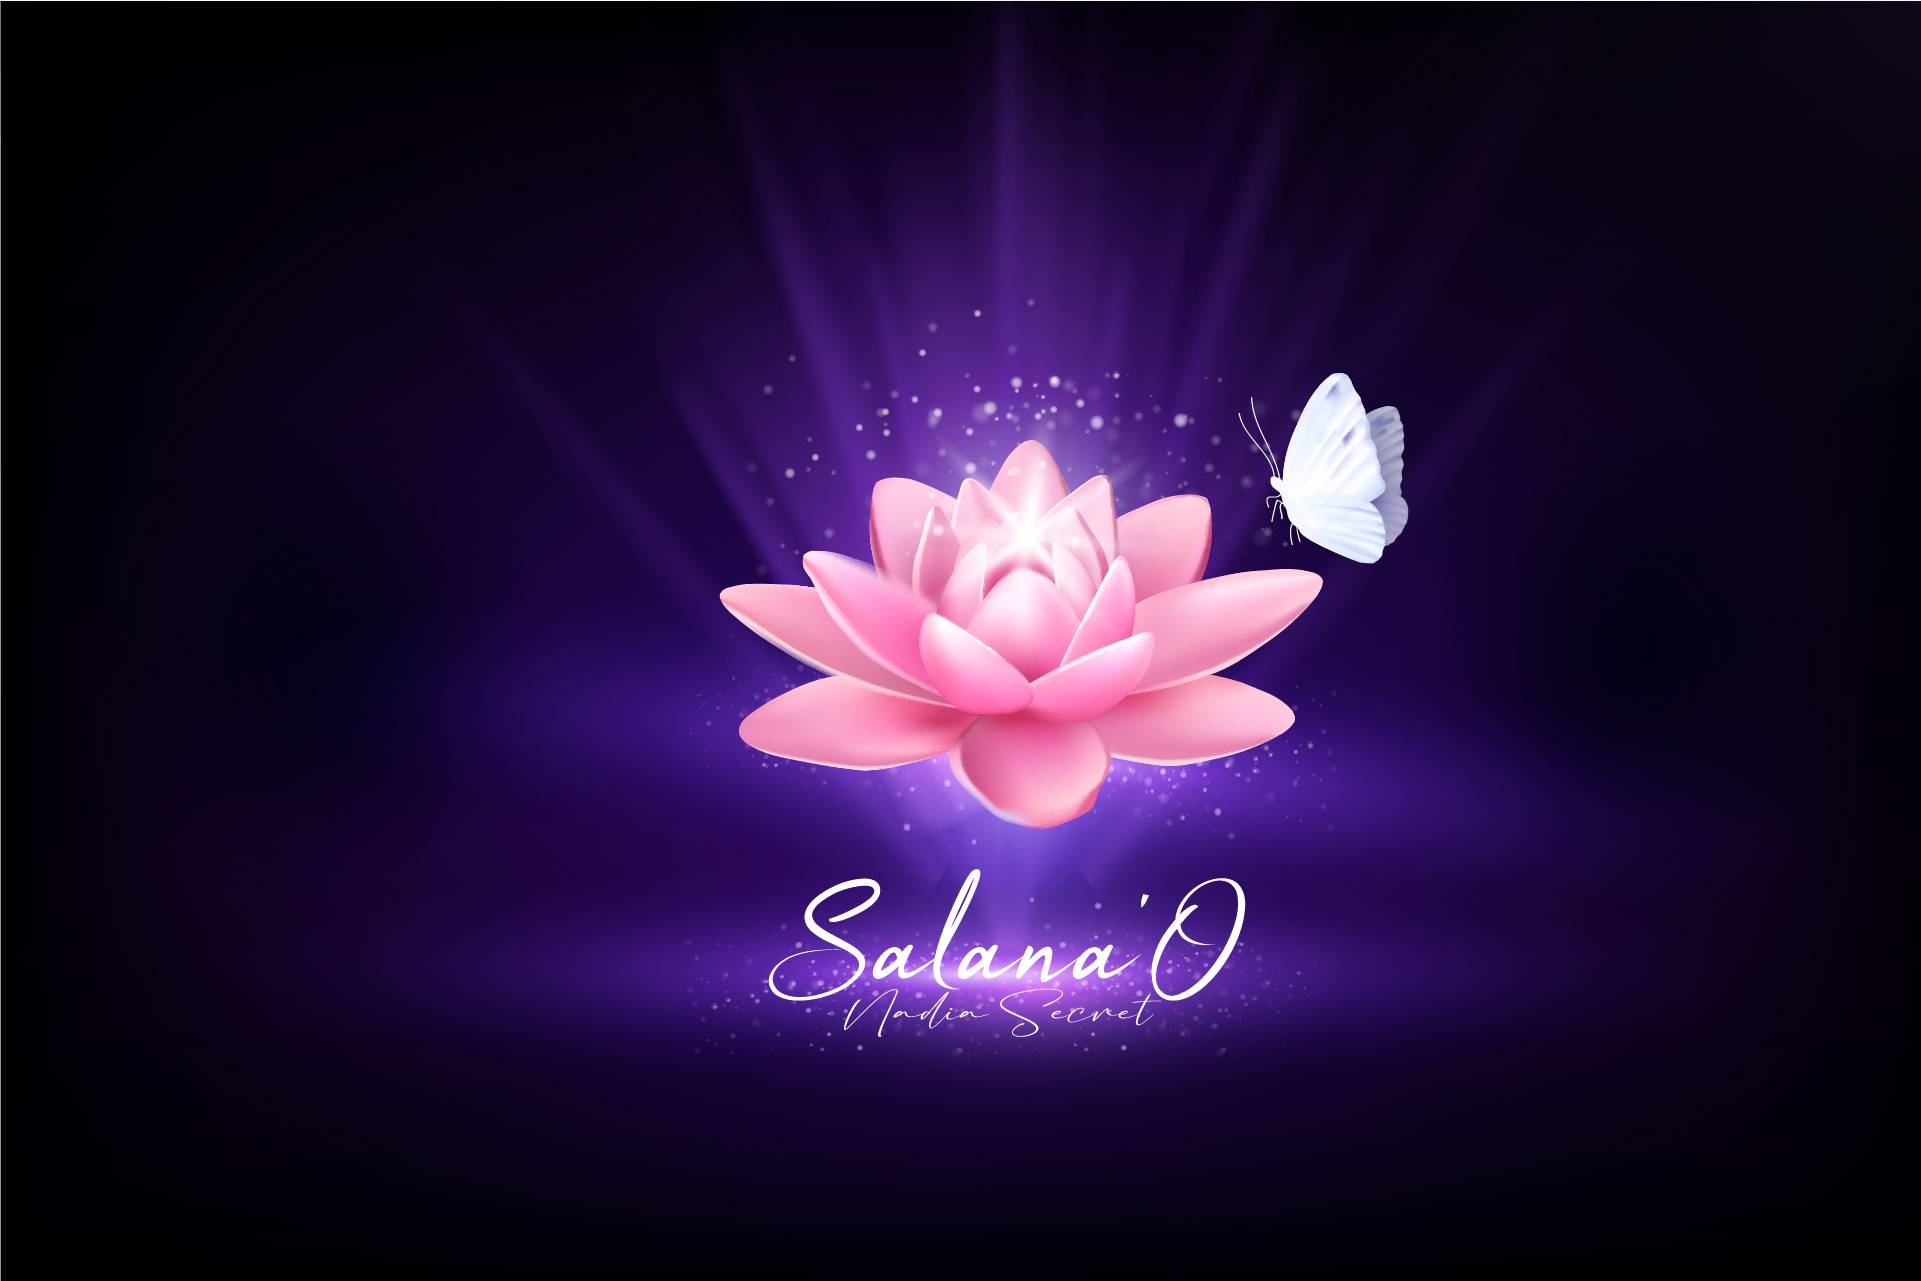 Salana'O par Nadia Secret praticienne en réflexologie